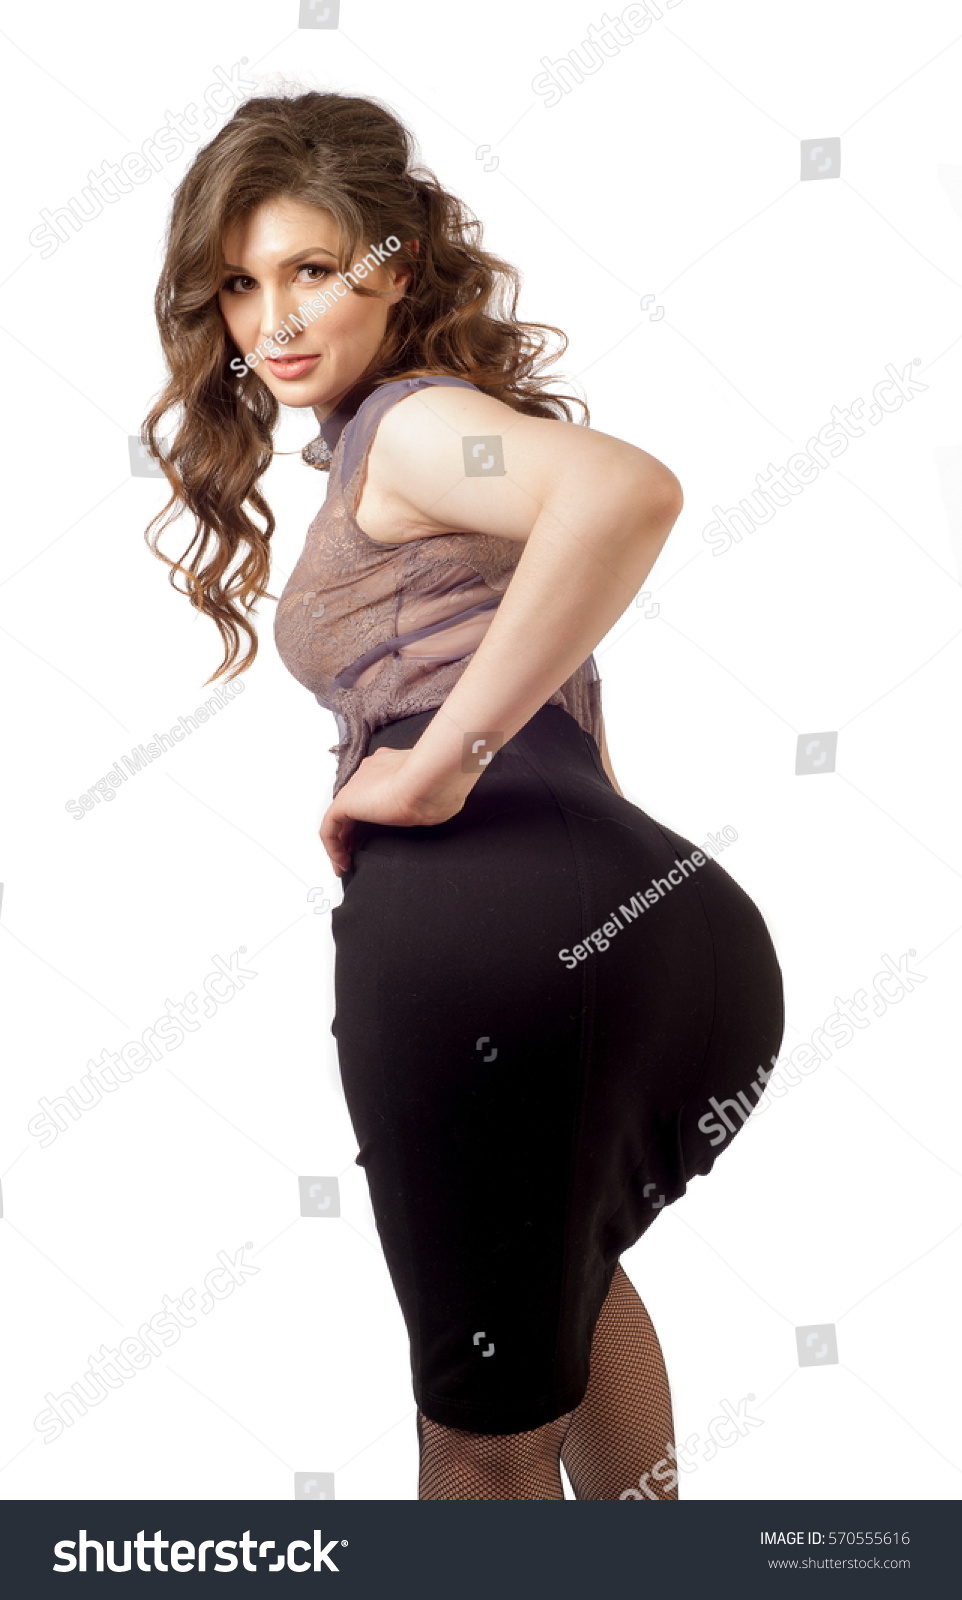 Big Ass Women And Girls Photos